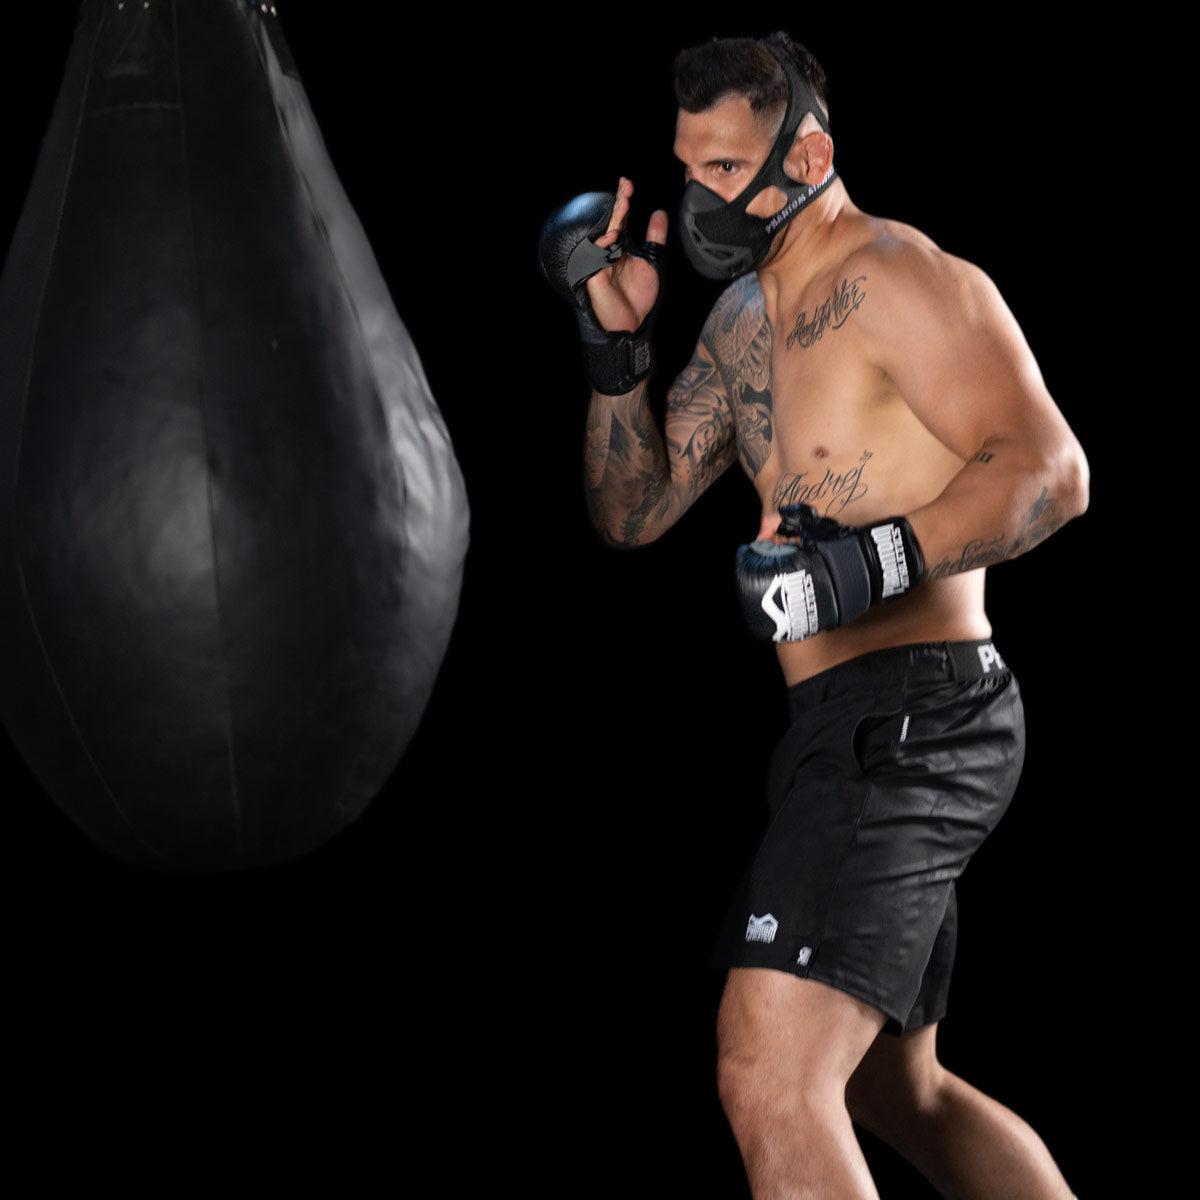 UFC Star Aleks Rakic beim Training am Sandsack mit der Phantom Trainingsmaske.